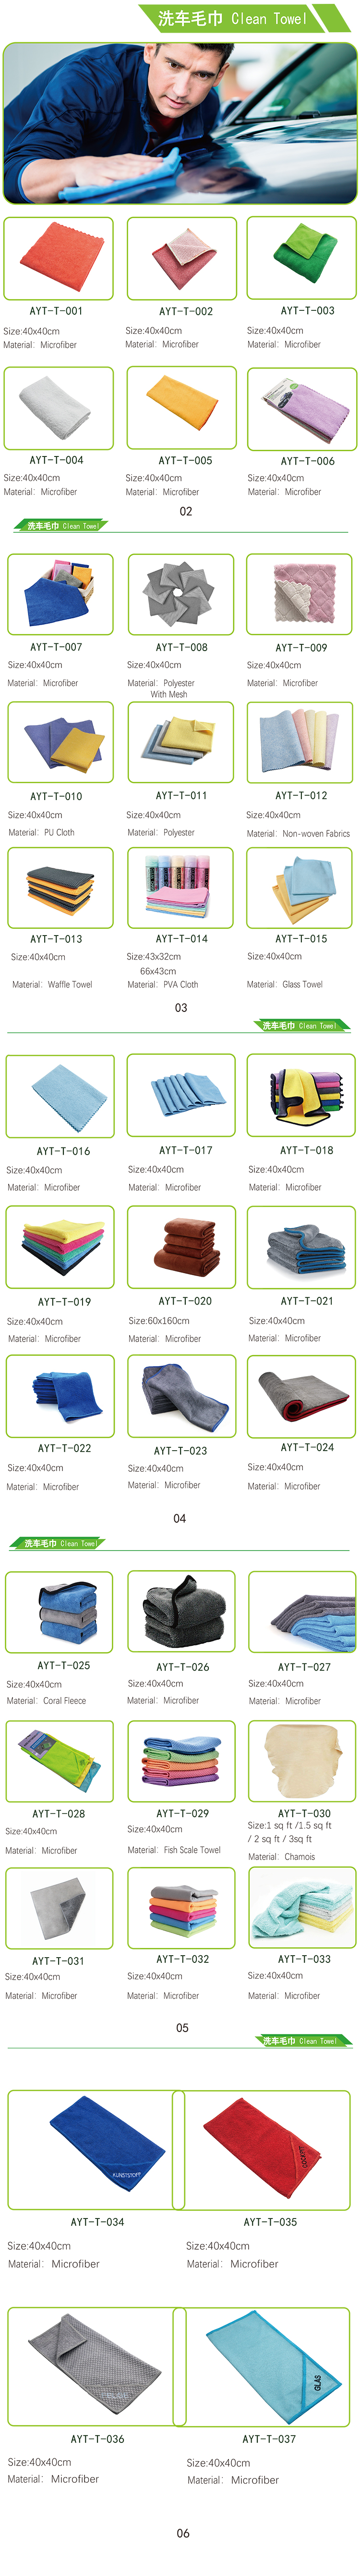 NINGBO AITE HOUSEWARES CO,LTD Catalog For wash towel